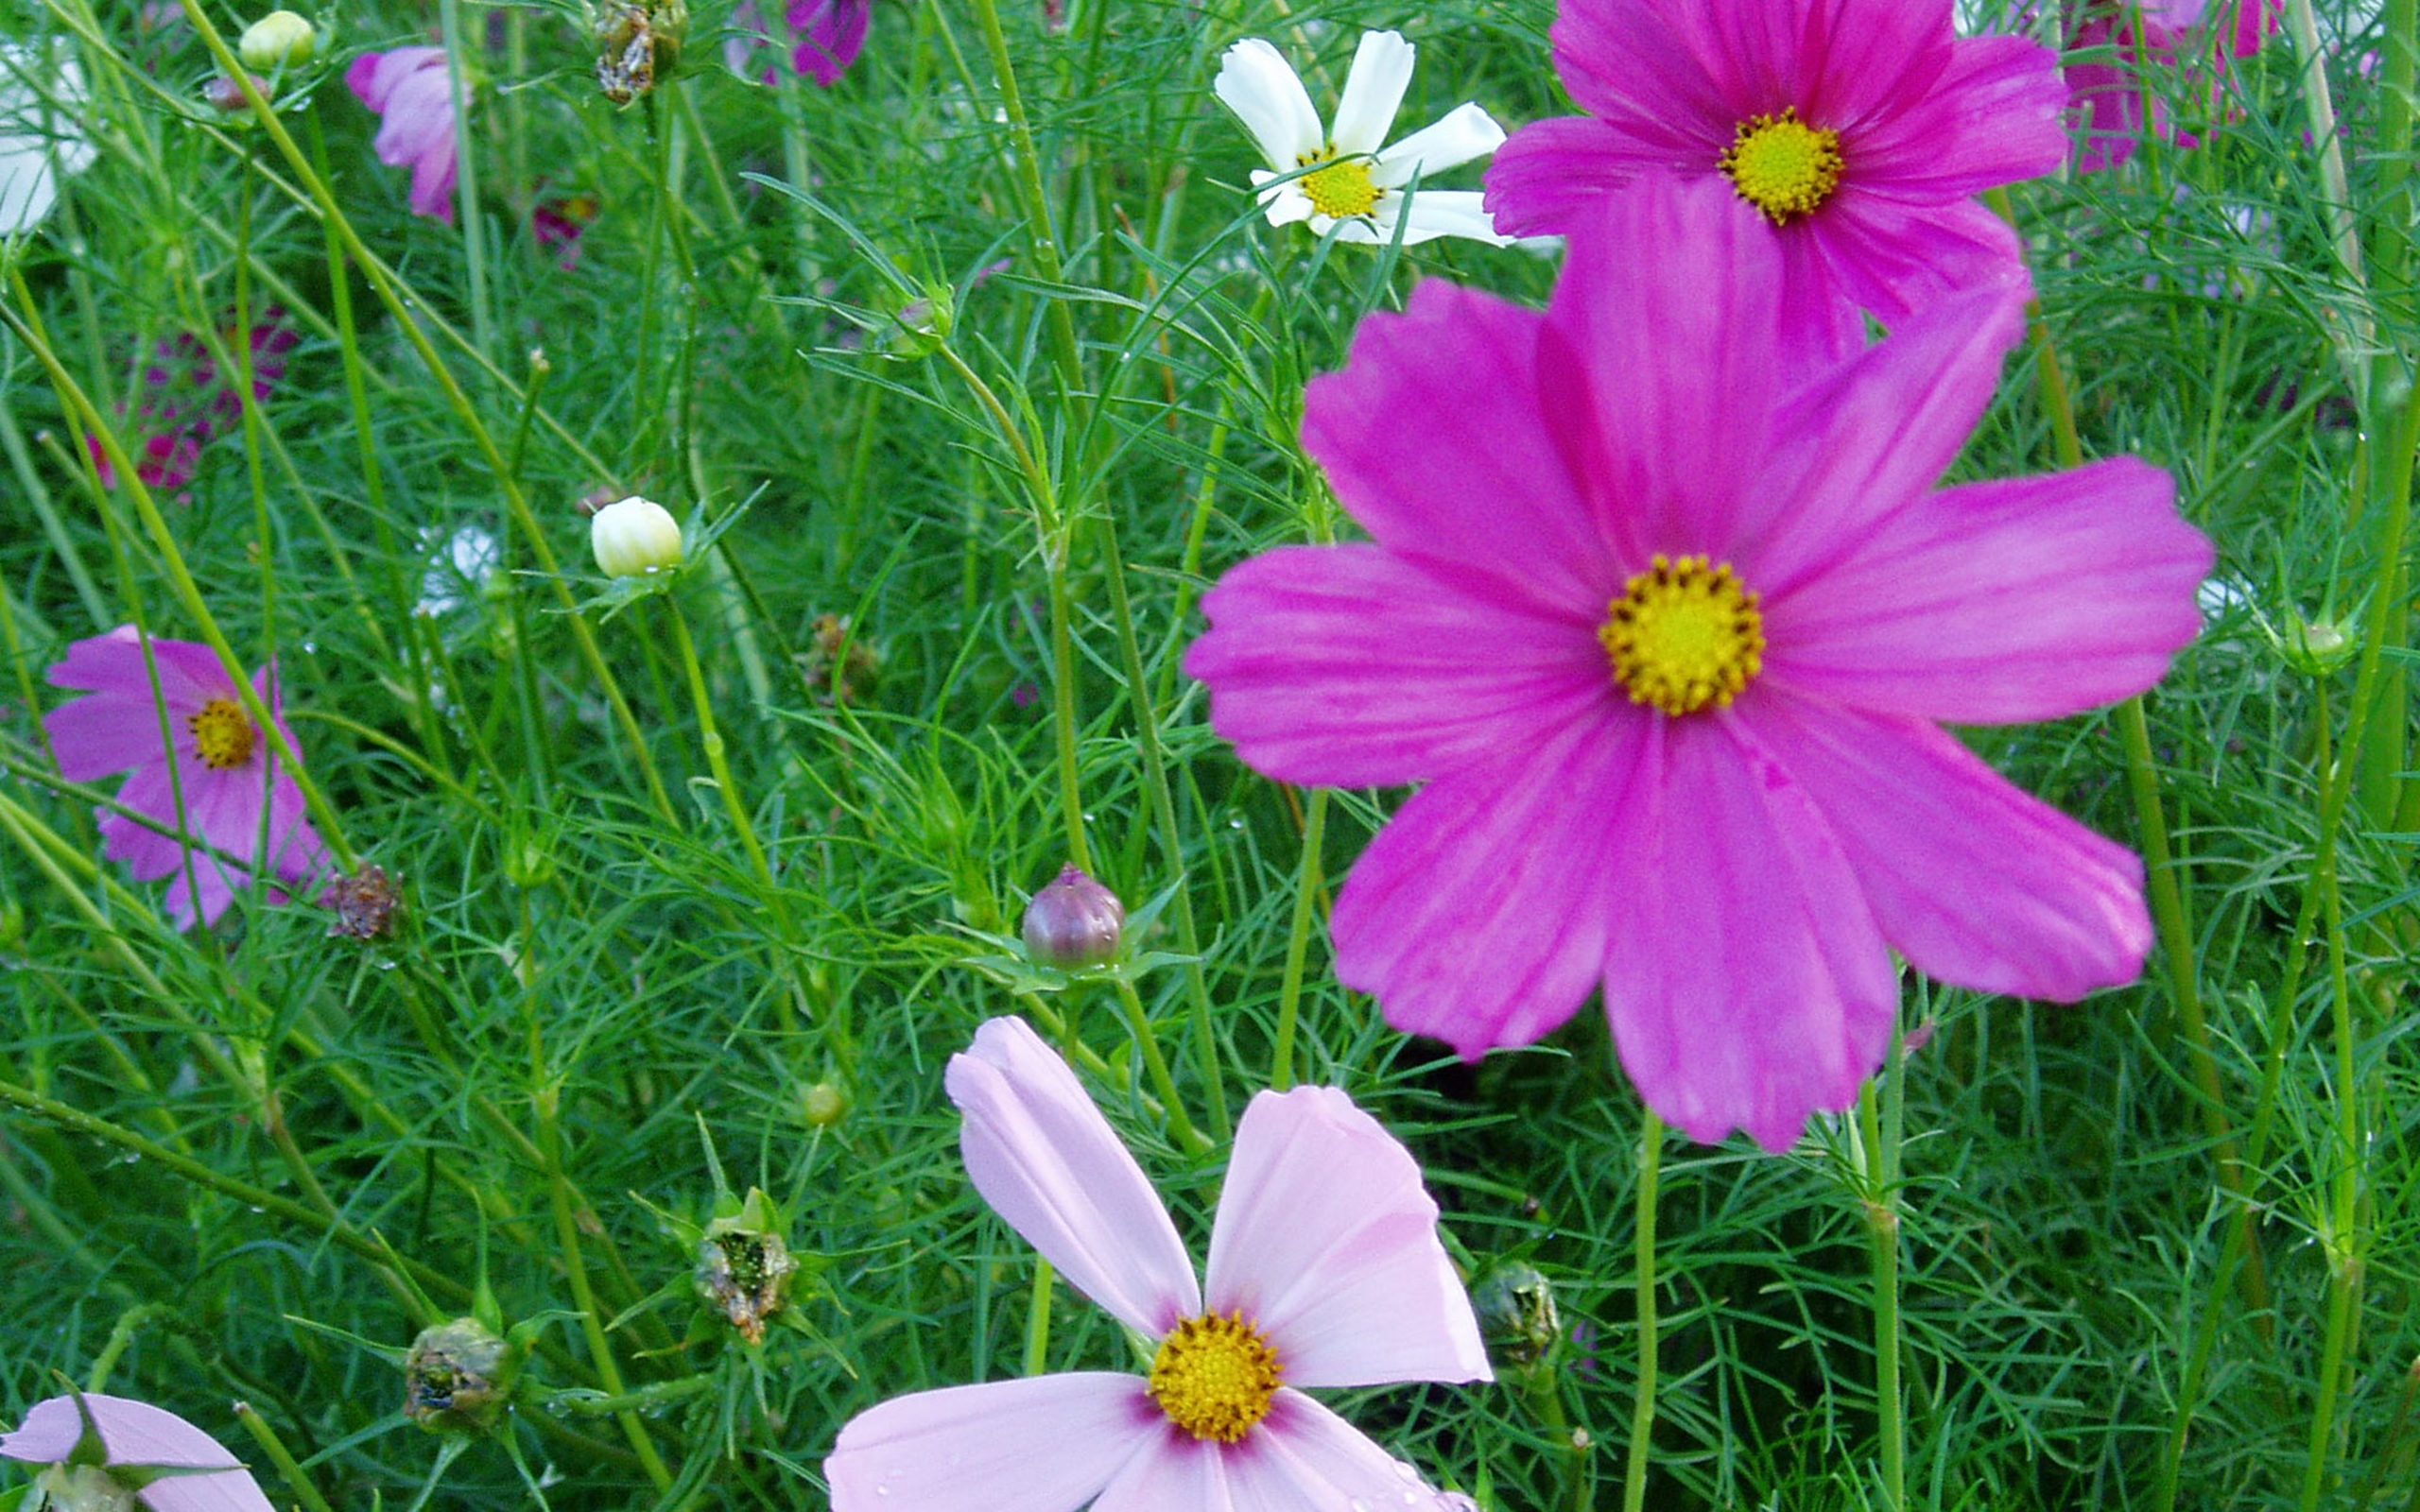 Wallpaper Desktop Flower Widescreen Flowers Pictures Listings Narure  Backgrounds Pink 55287 : 